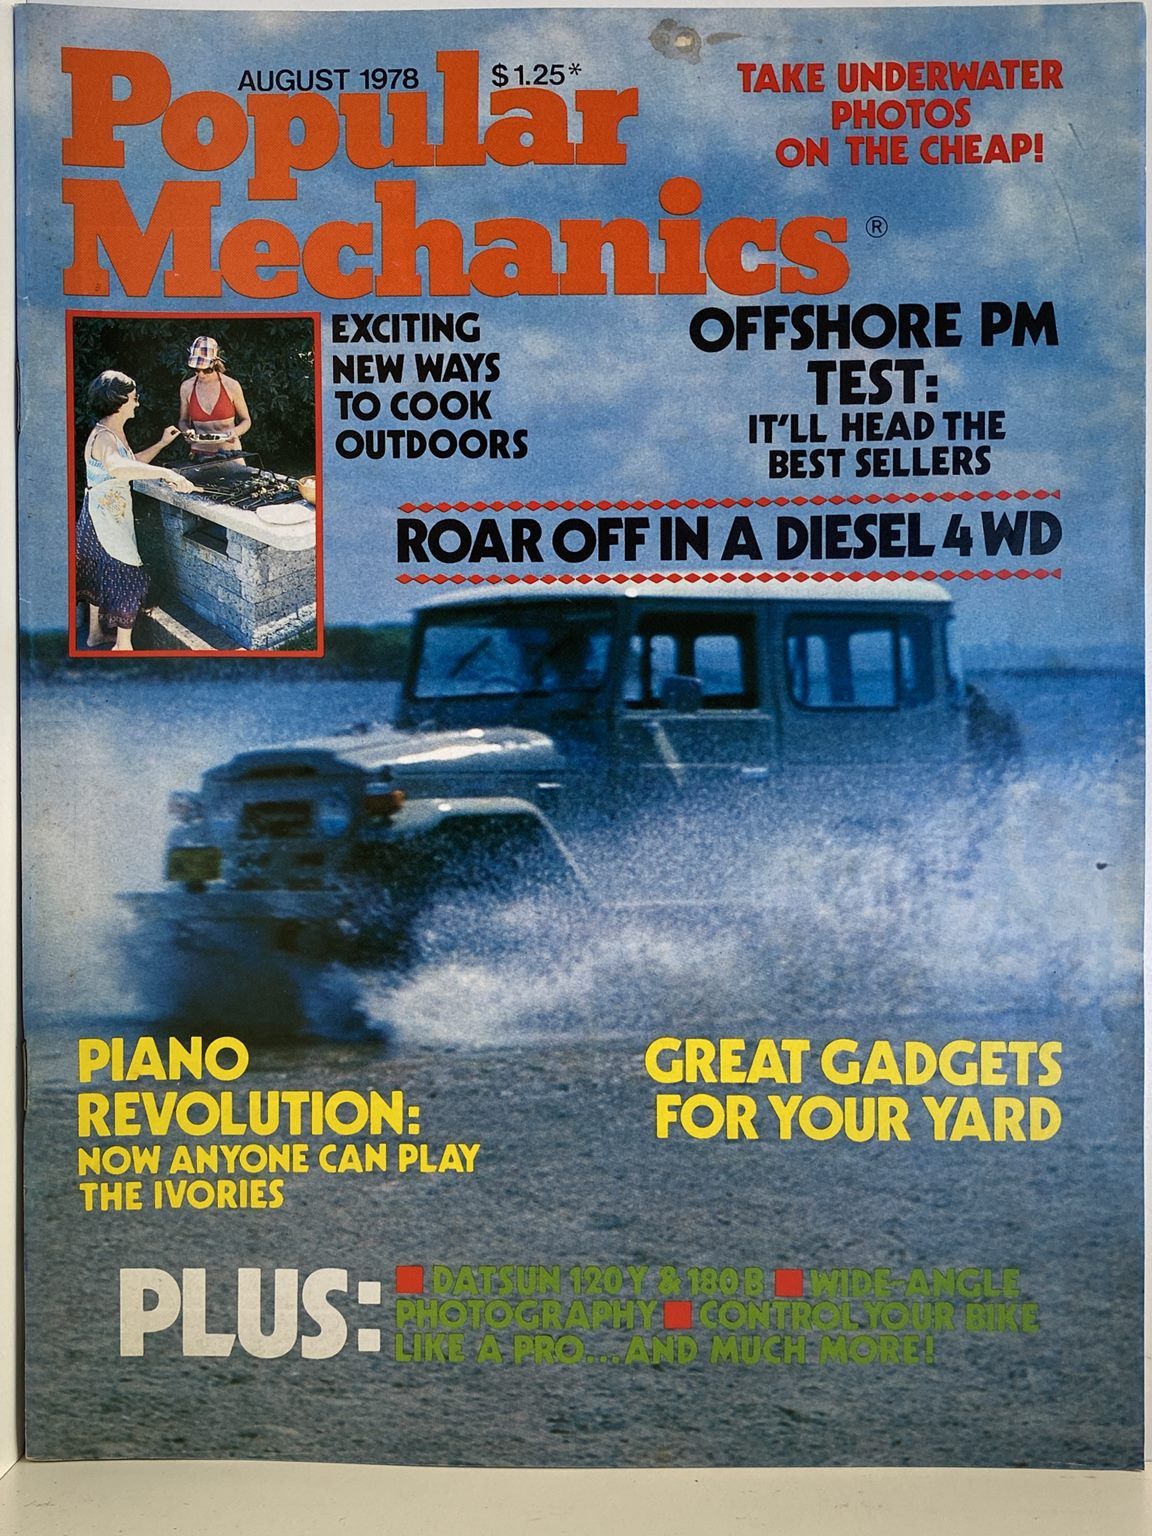 VINTAGE MAGAZINE: Popular Mechanics - Vol. 147, No. 8 - August 1978